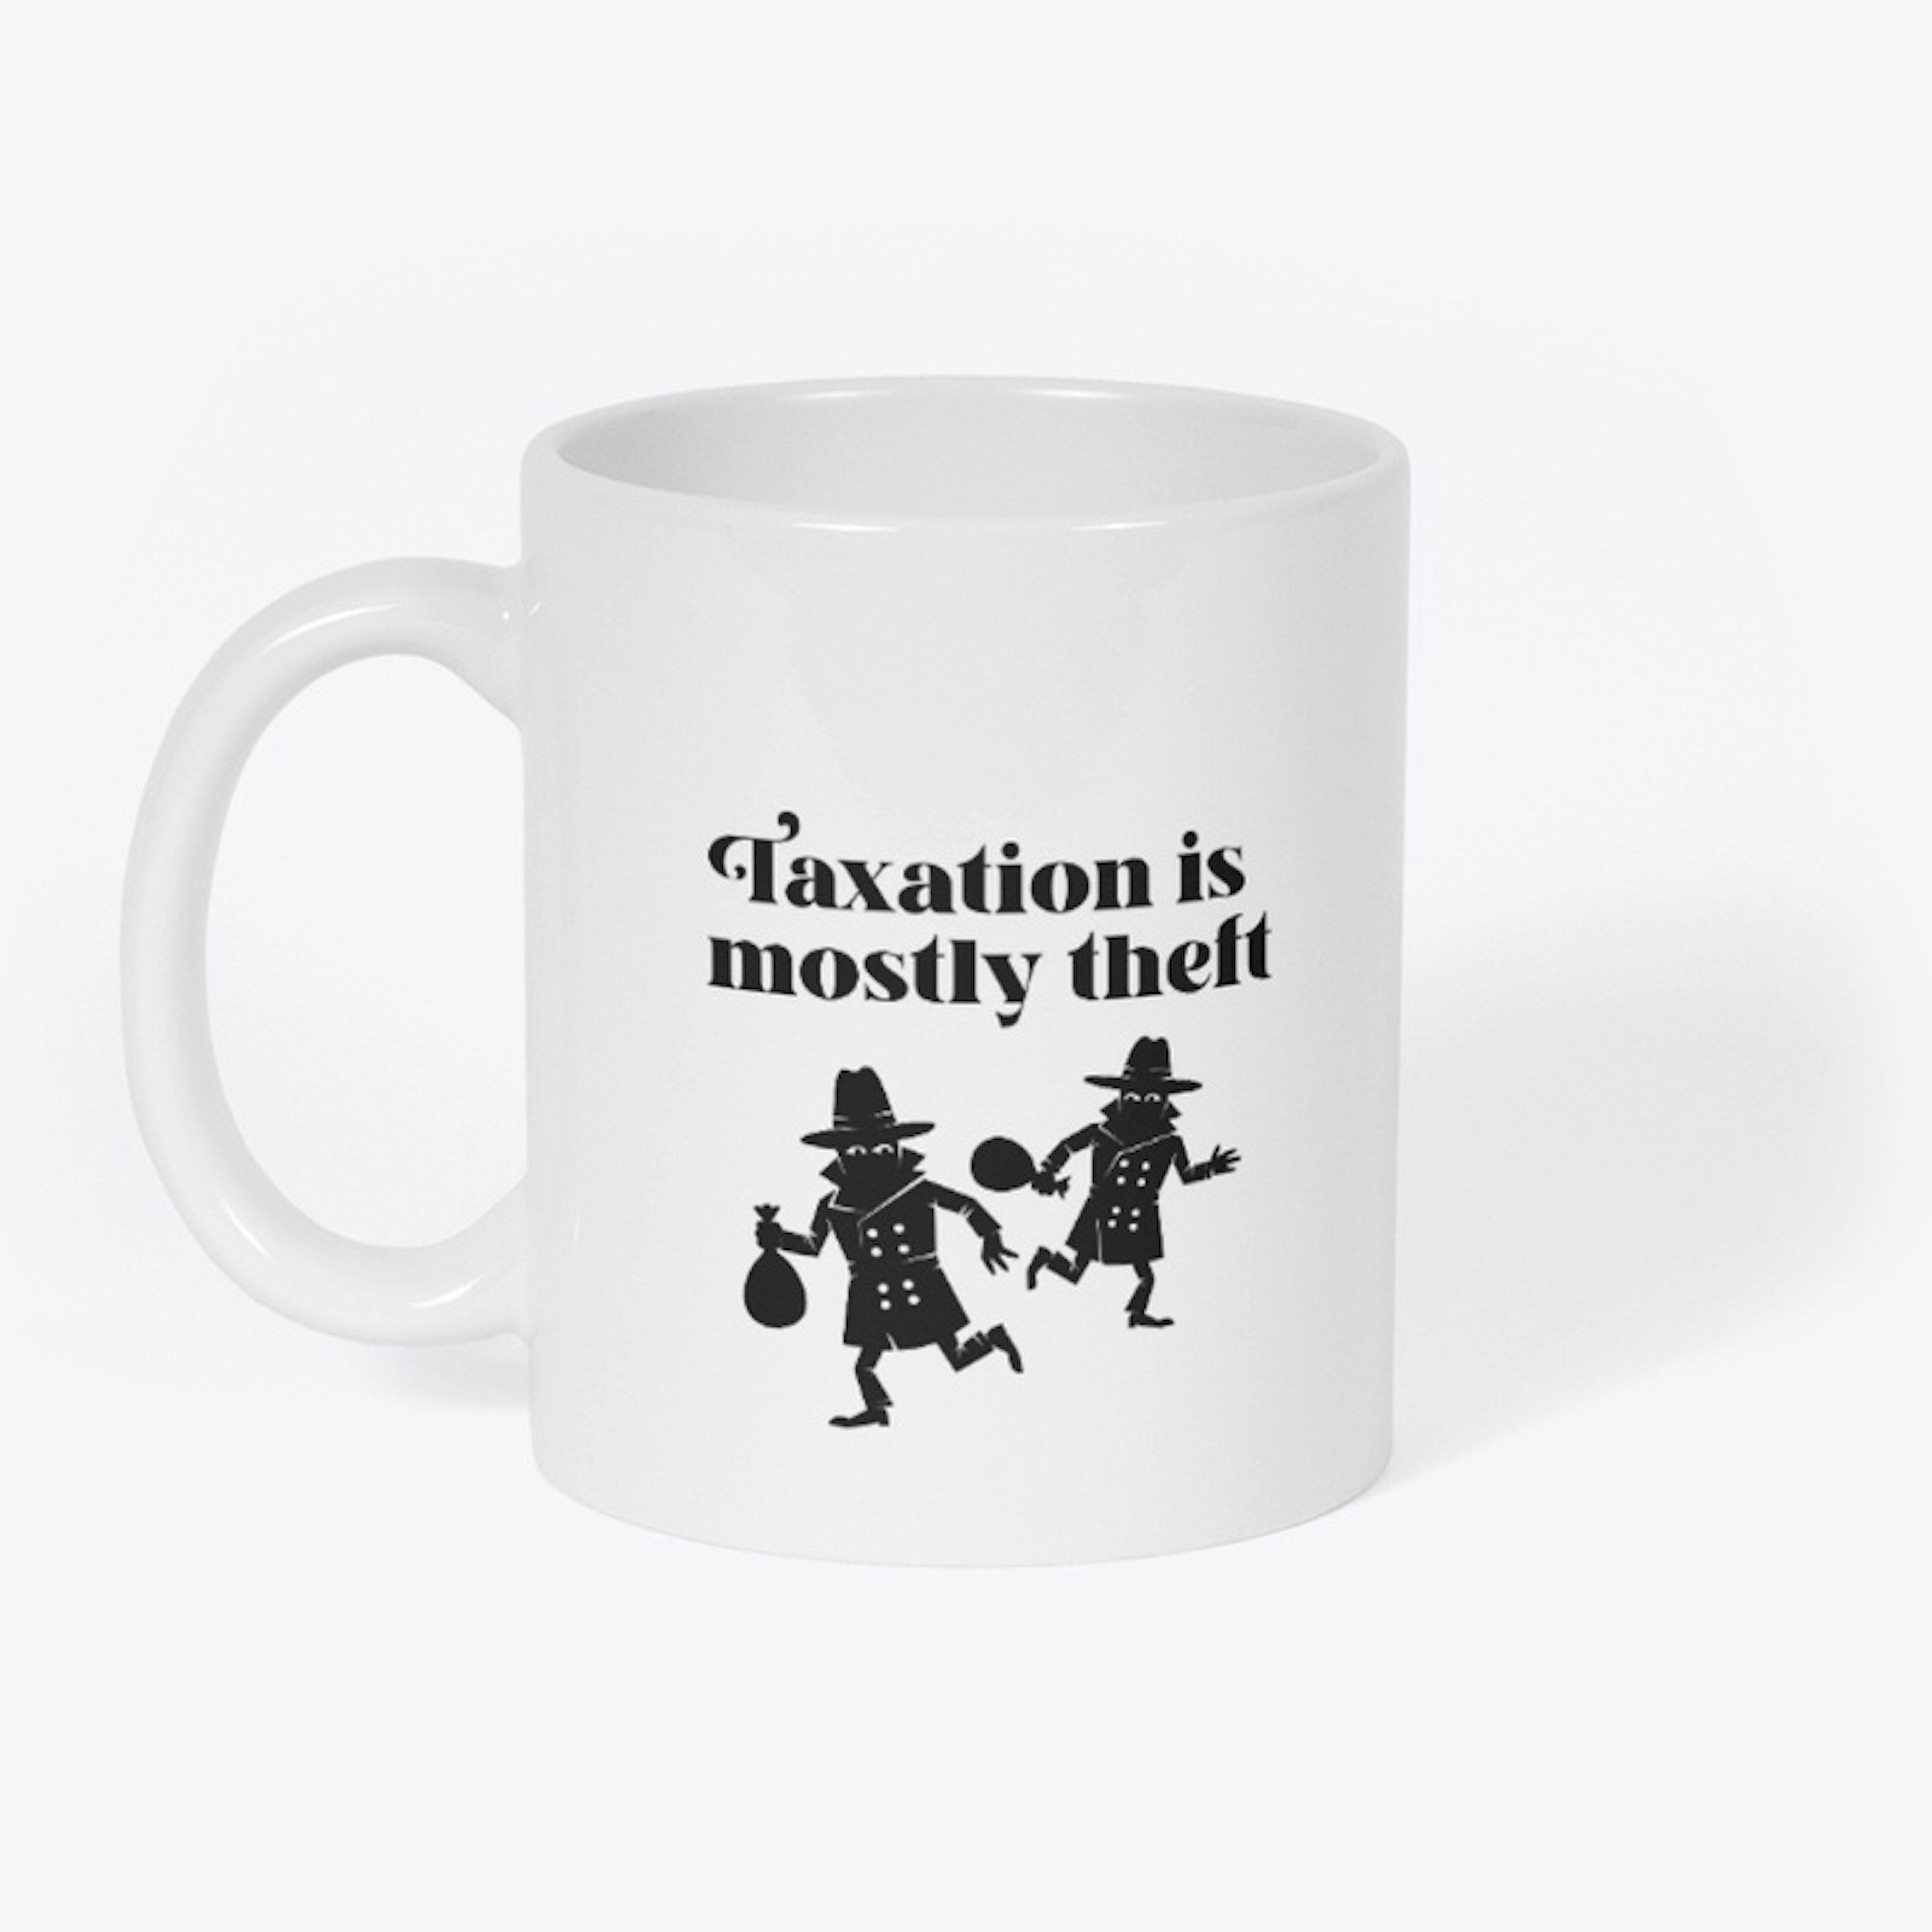 "Taxation is mostly theft" mug